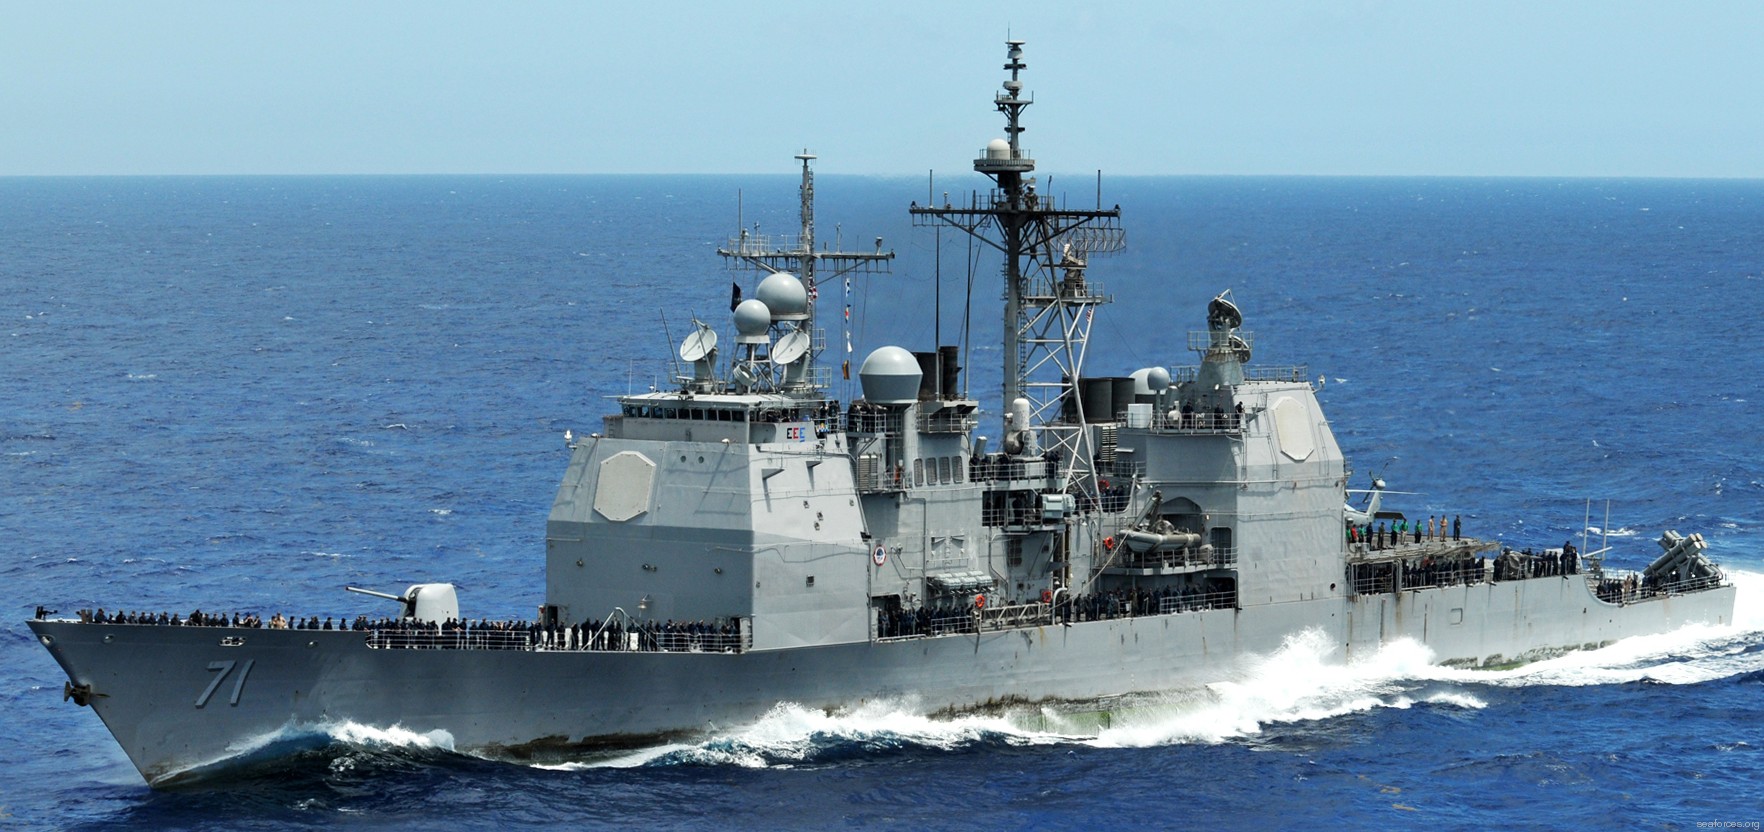 cg-71 uss cape st. george ticonderoga class guided missile cruiser us navy 23 atlantic ocean